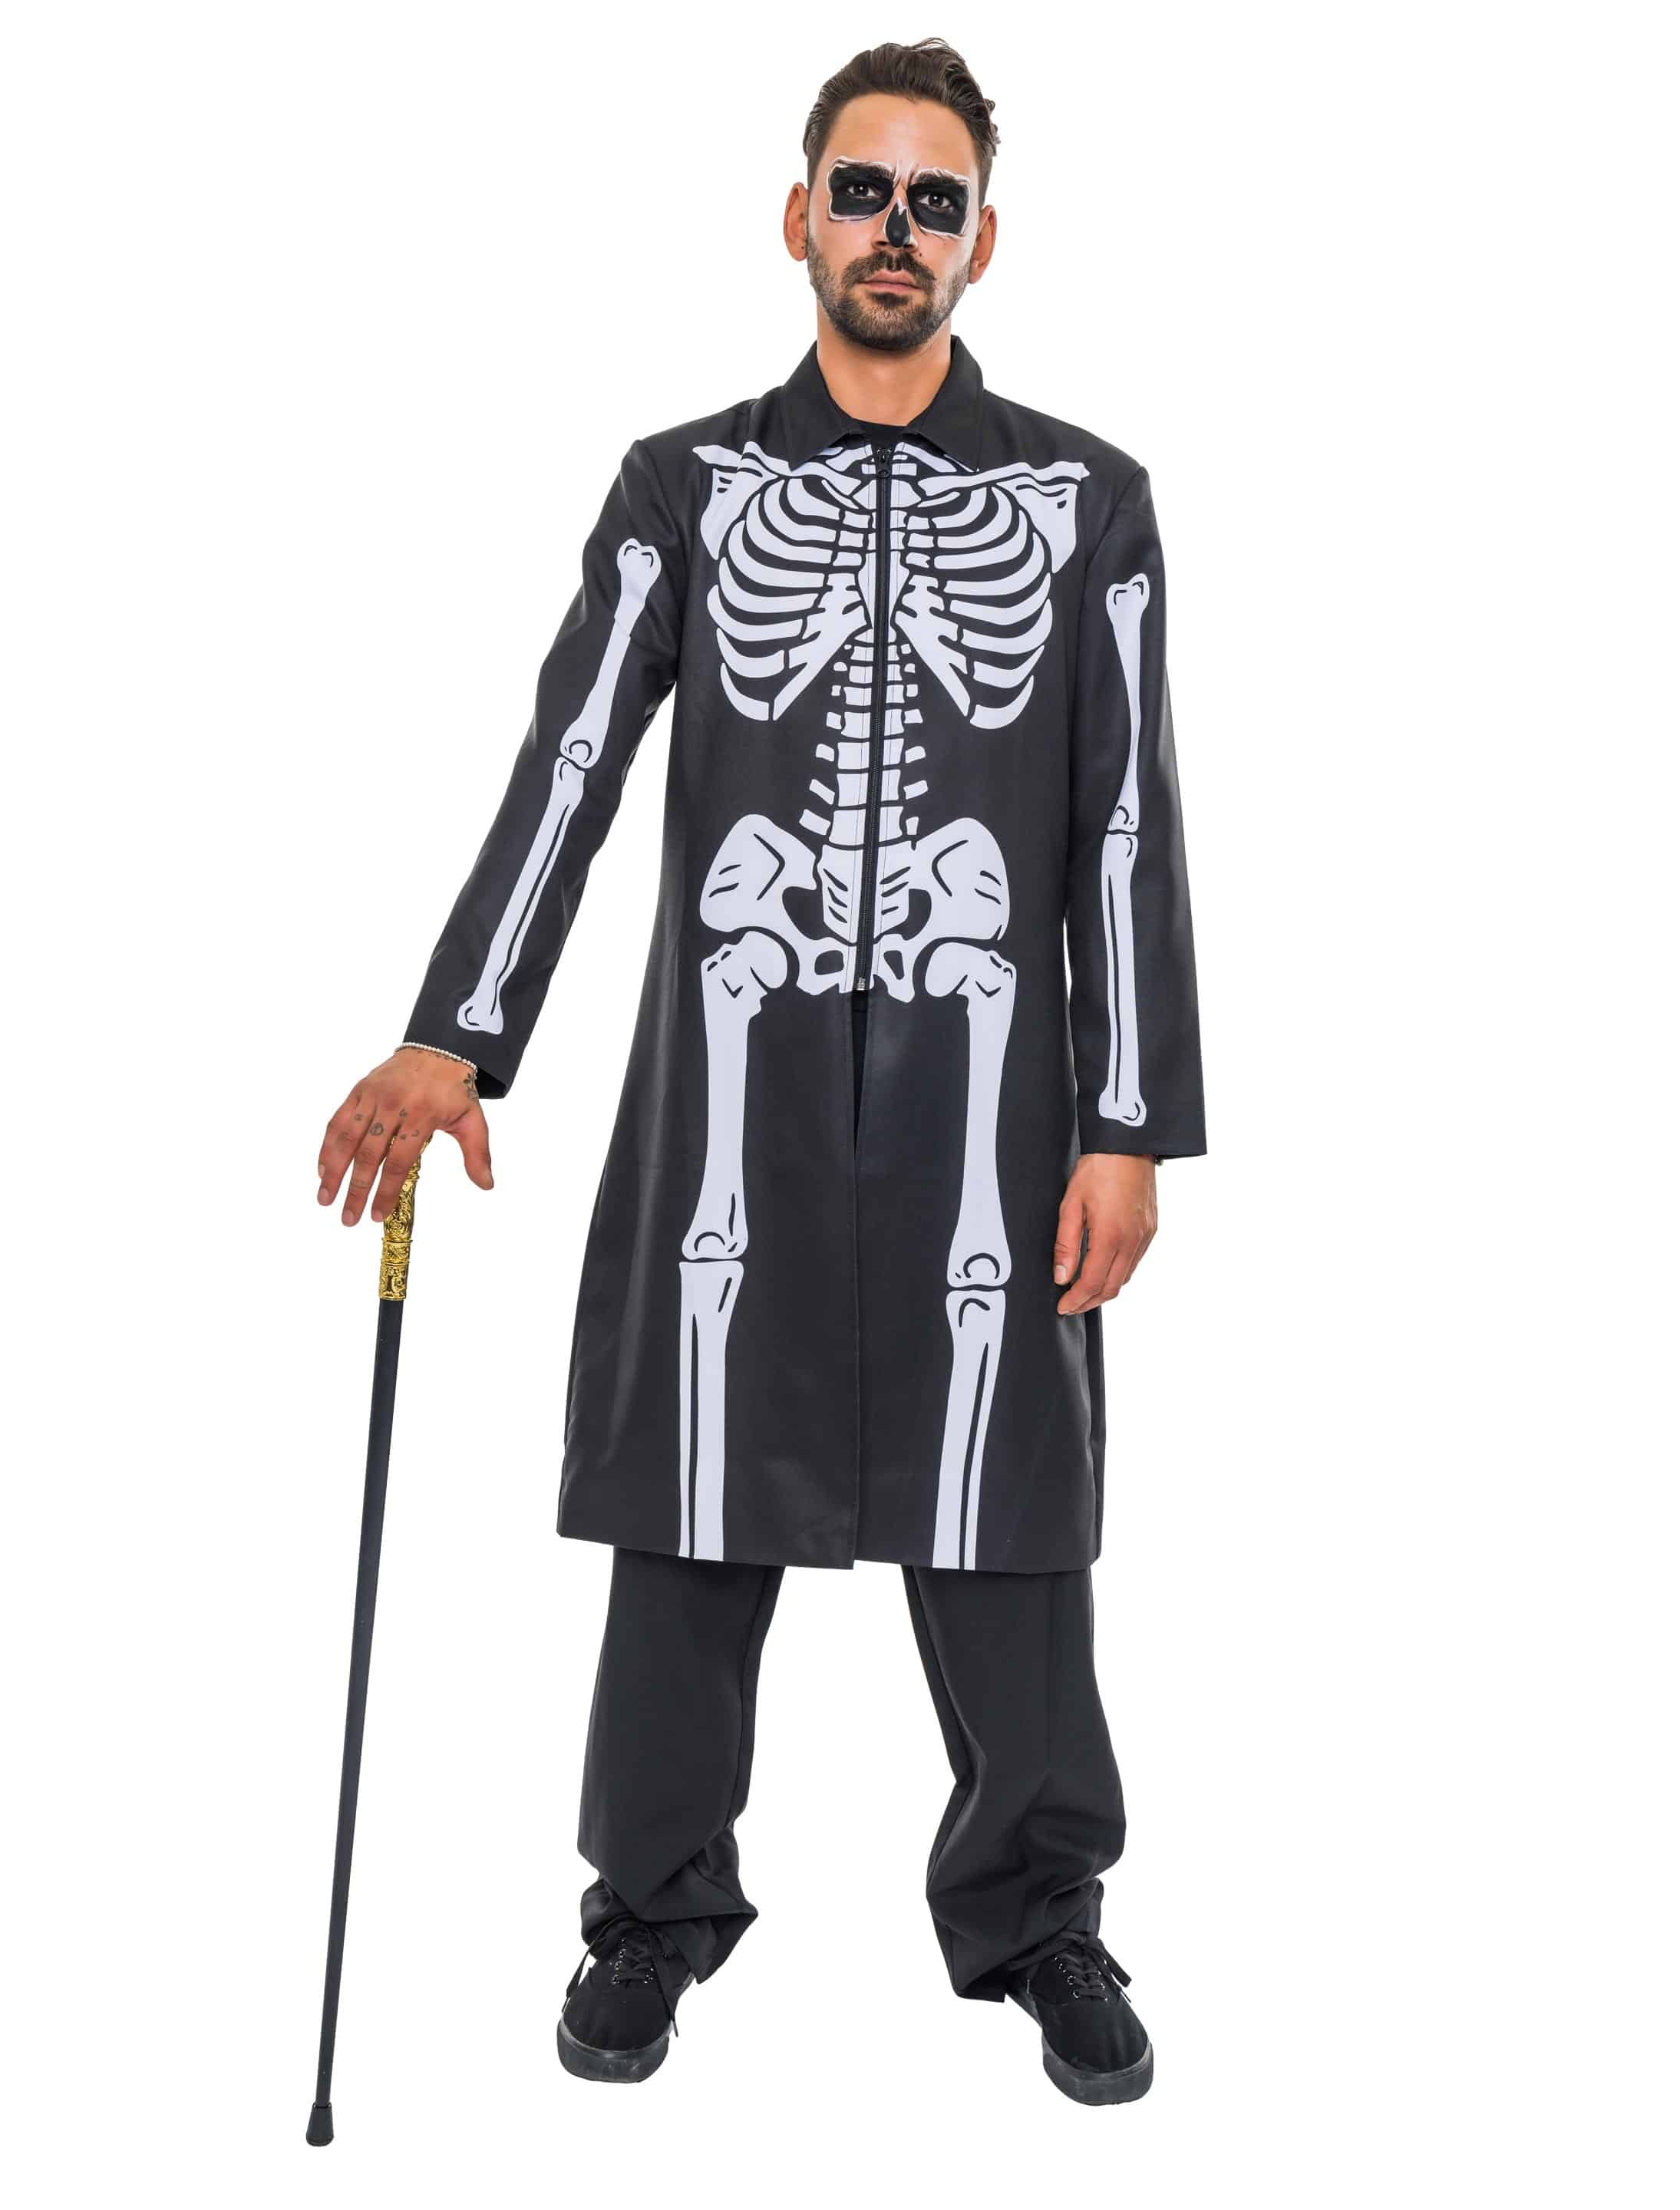 Mantel mit Skelett Herren Herren schwarz L-XL